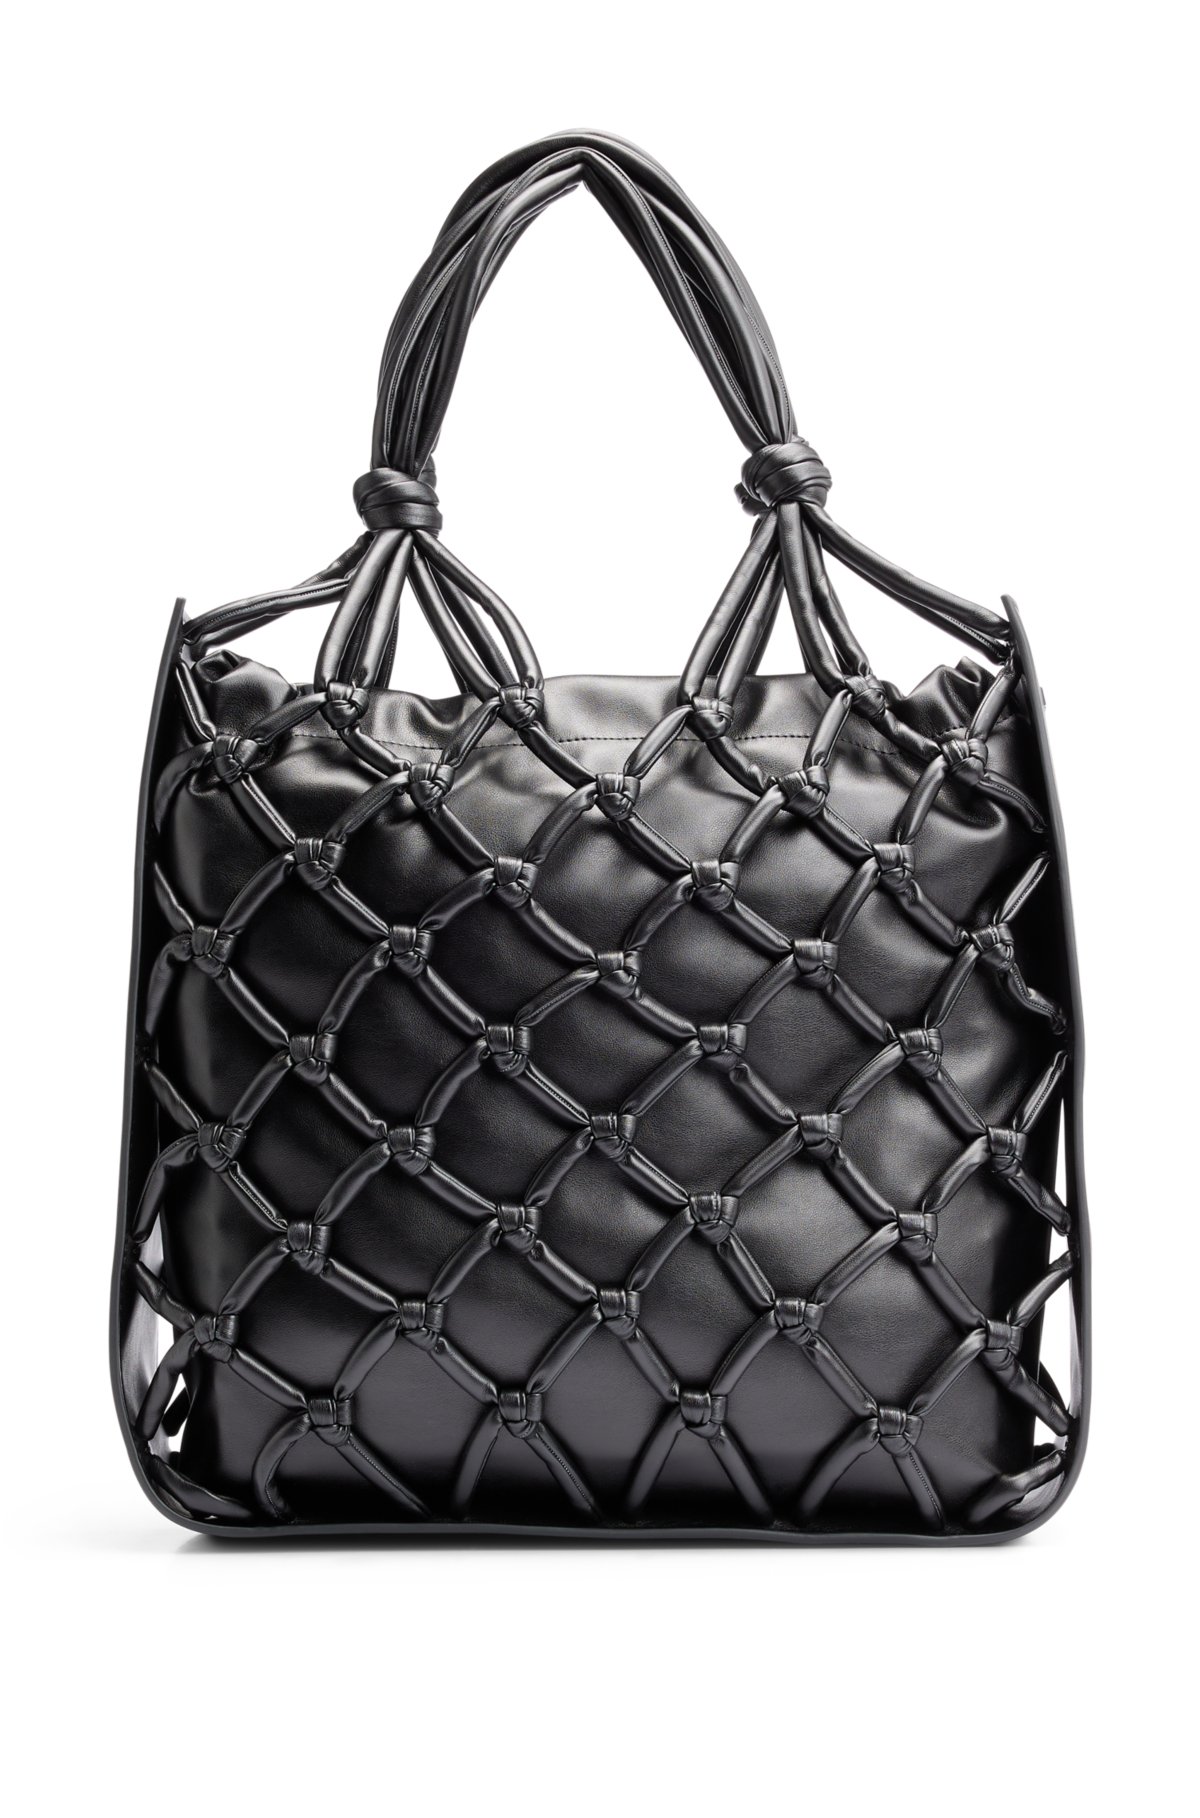 CM Monogram Fanny Bag Waist Bag - New Arrivals - Onsale Handbag